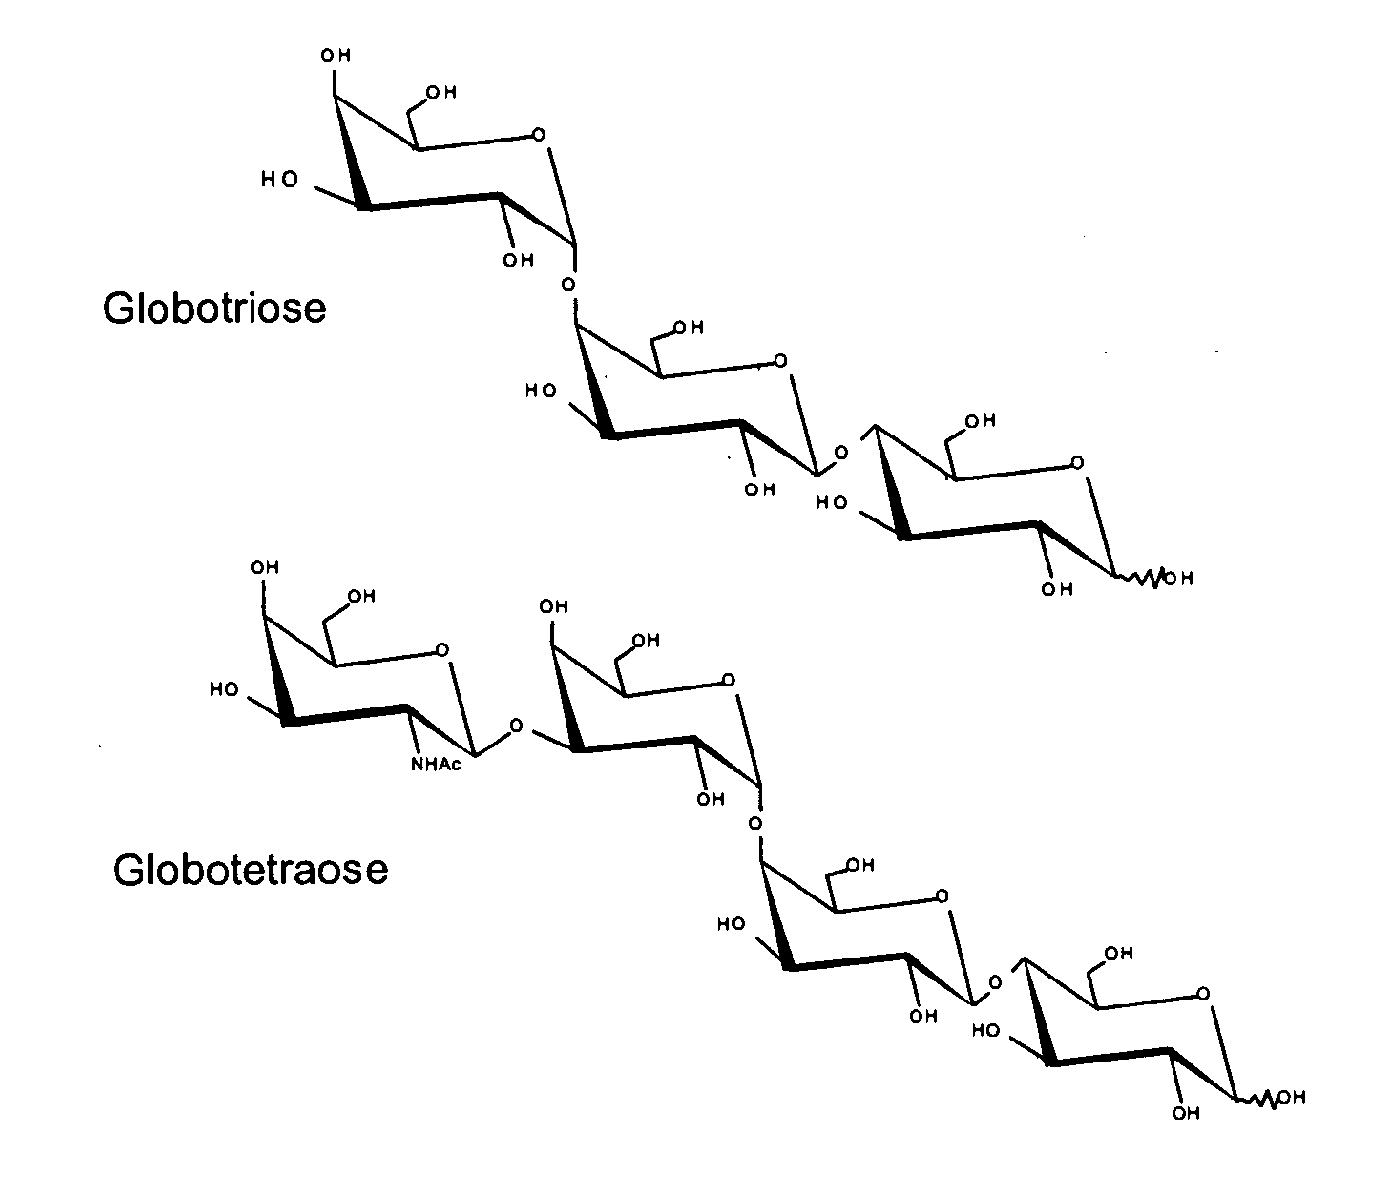 Production of globosides oligosaccharieds using metabolically engineered microorganisms